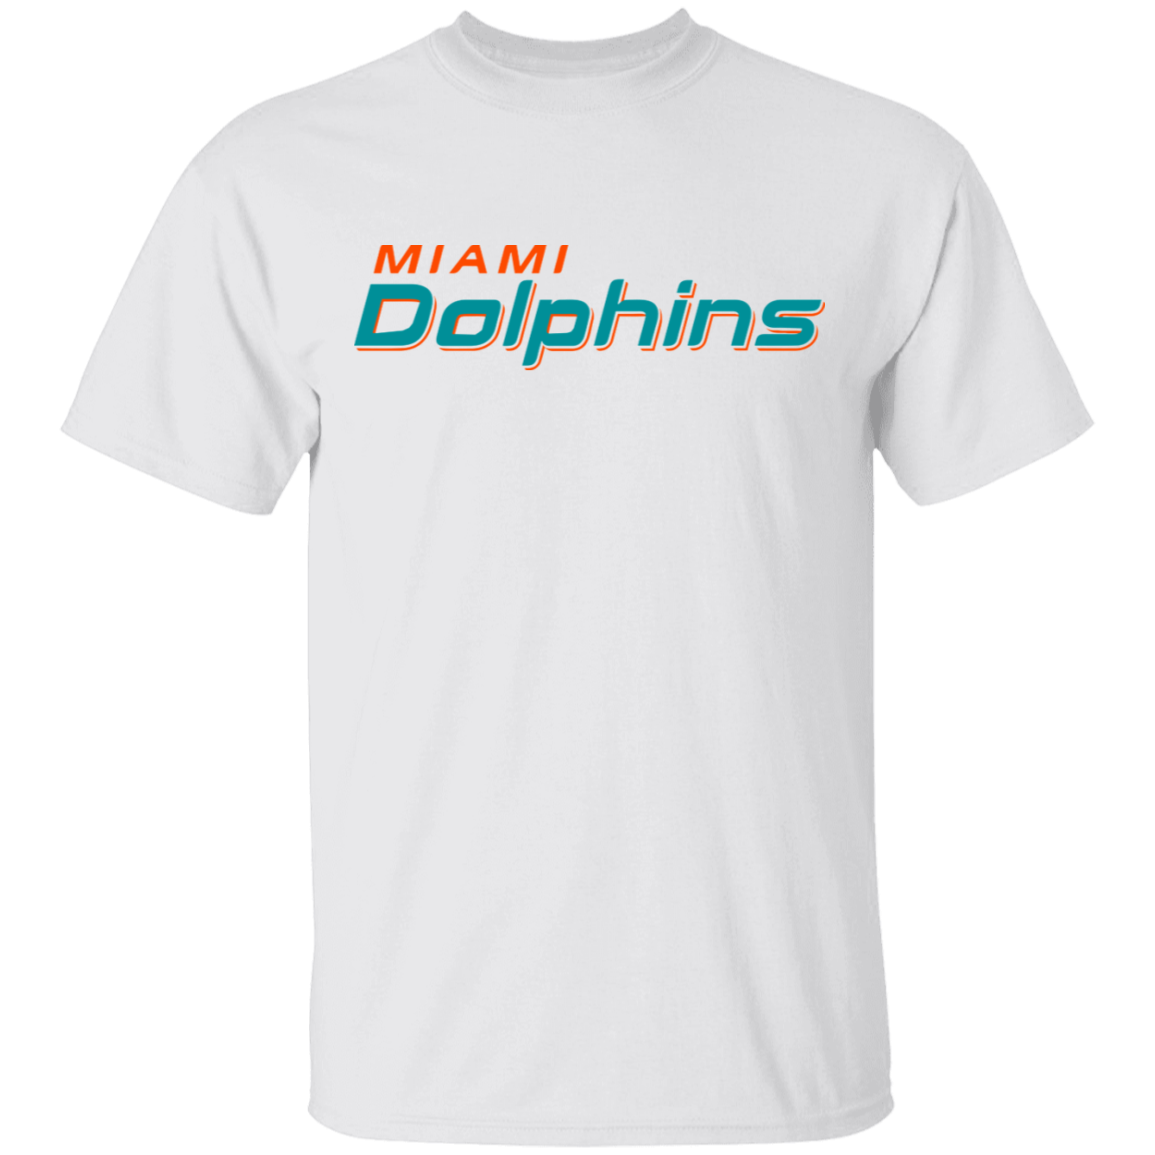 nike dolphins shirt